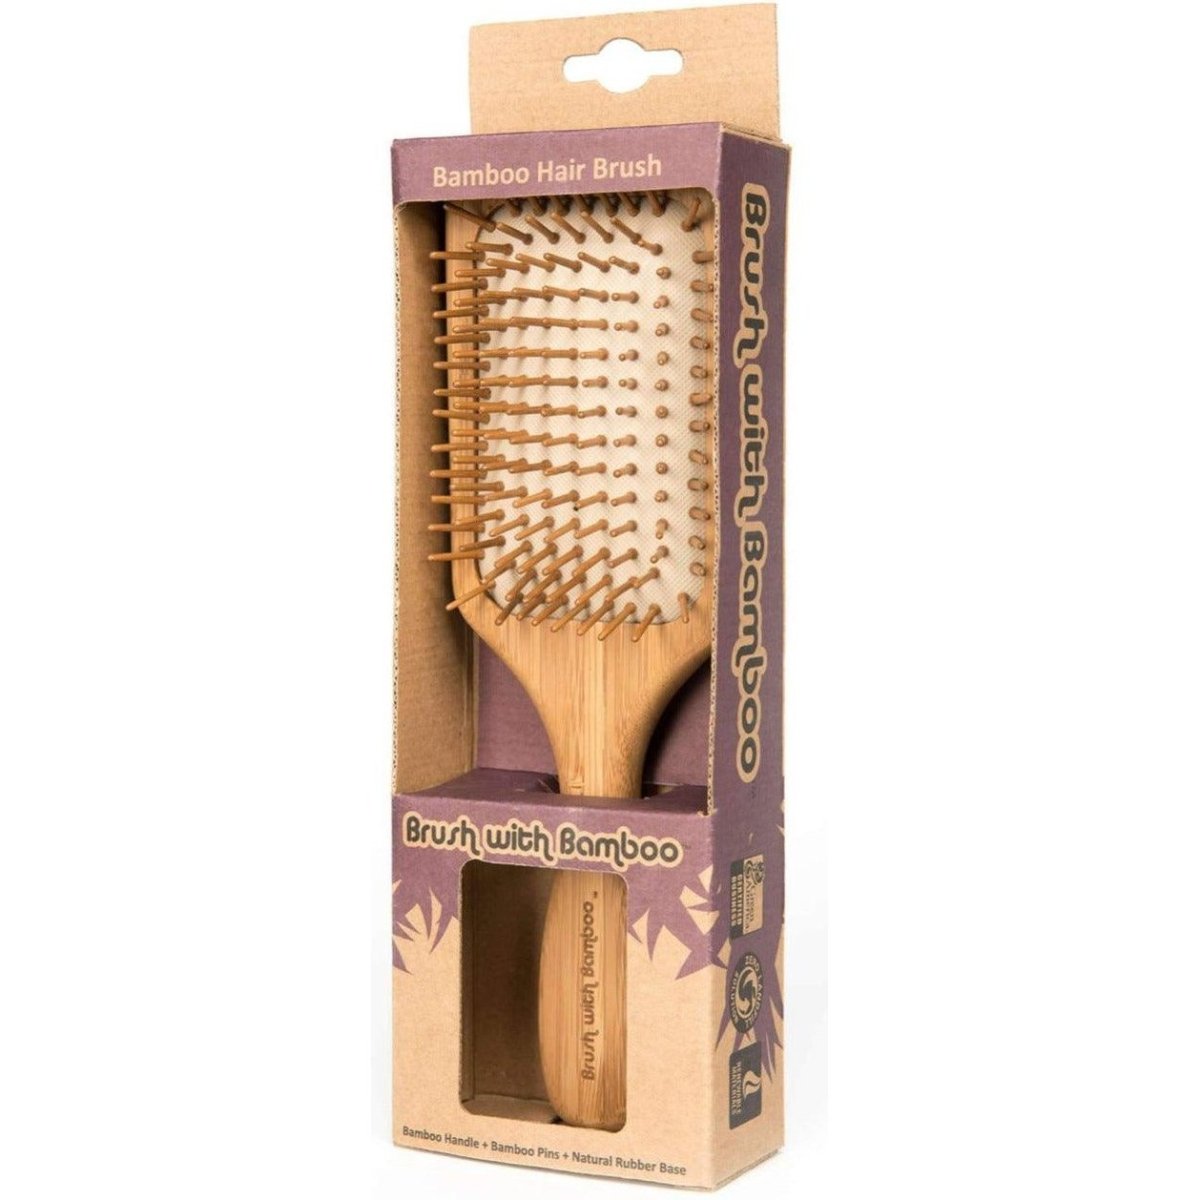 Bamboo Hair Brush in paper packaging